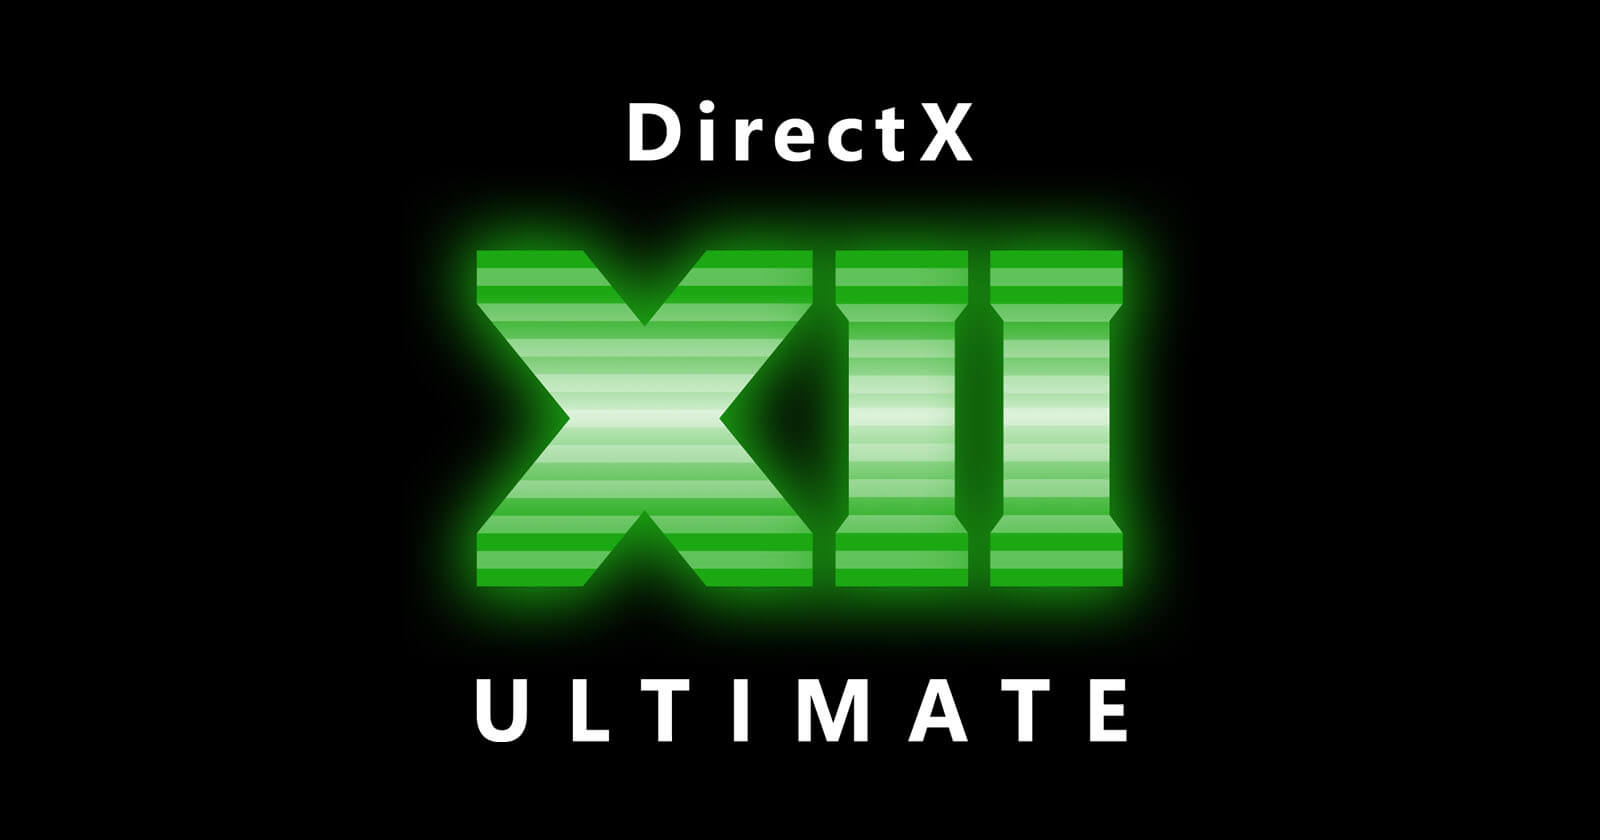 directx software